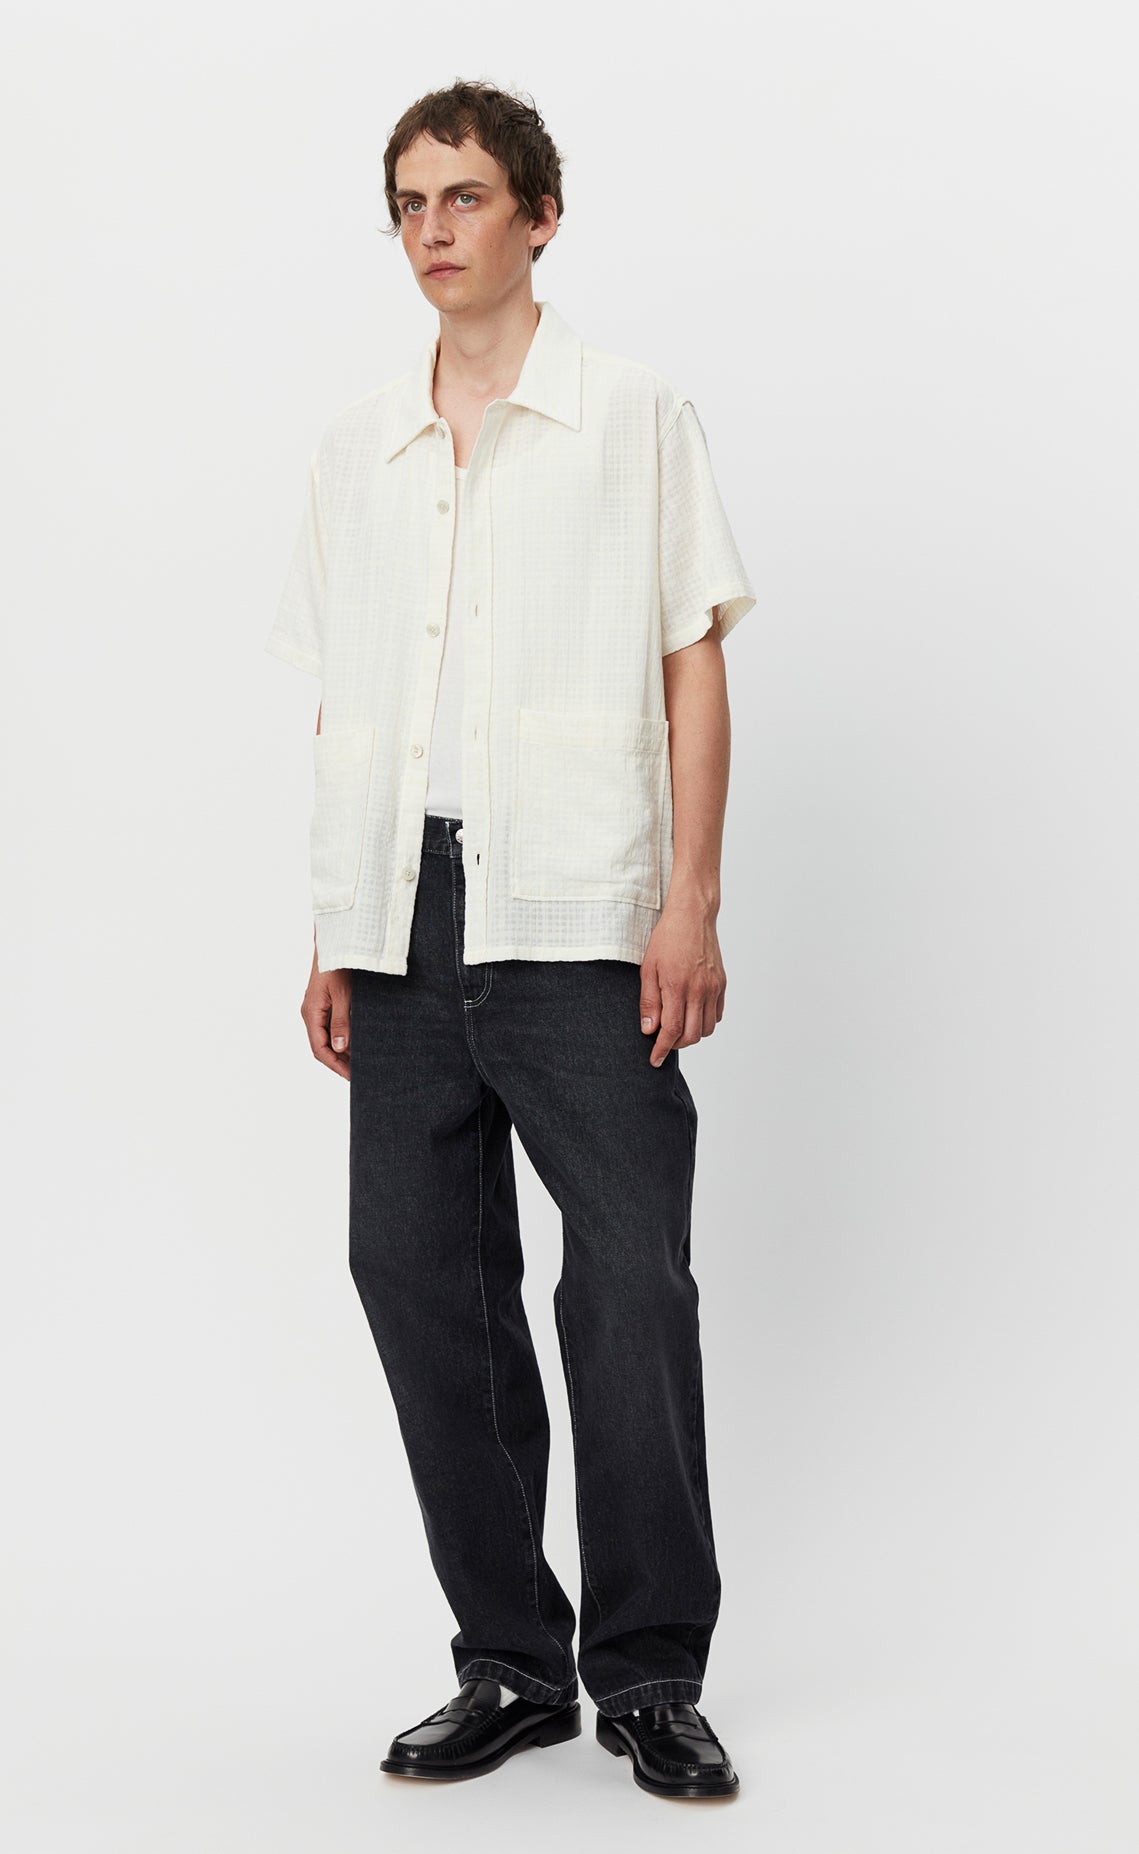 Senior Shirt - Off White-mfpen-W2 Store